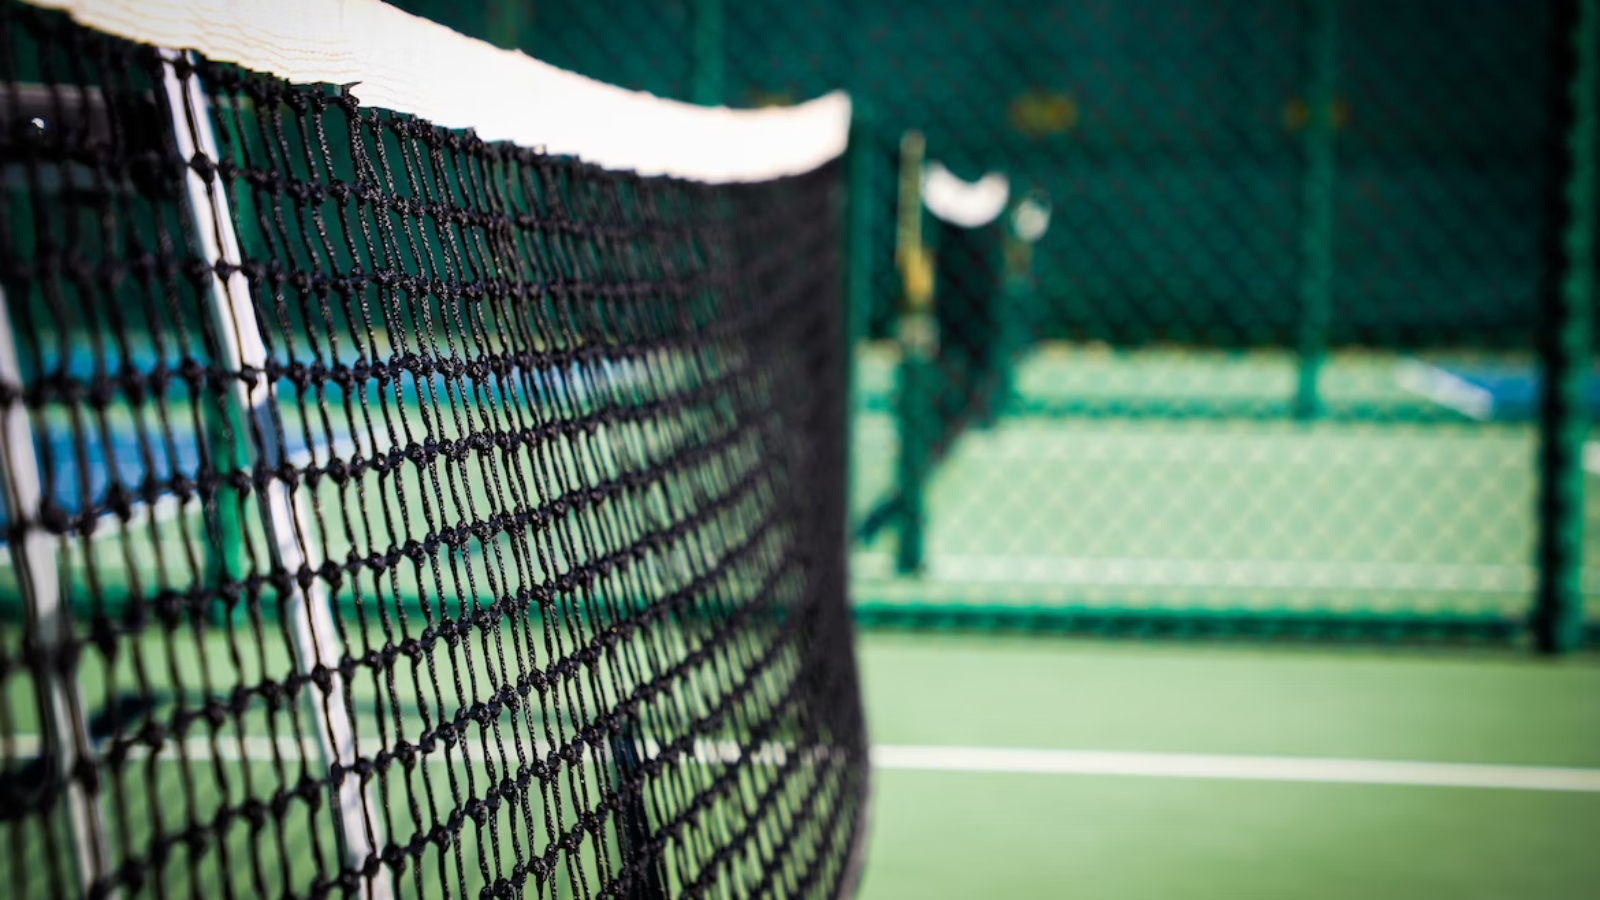 Grass tennis court with close up of net